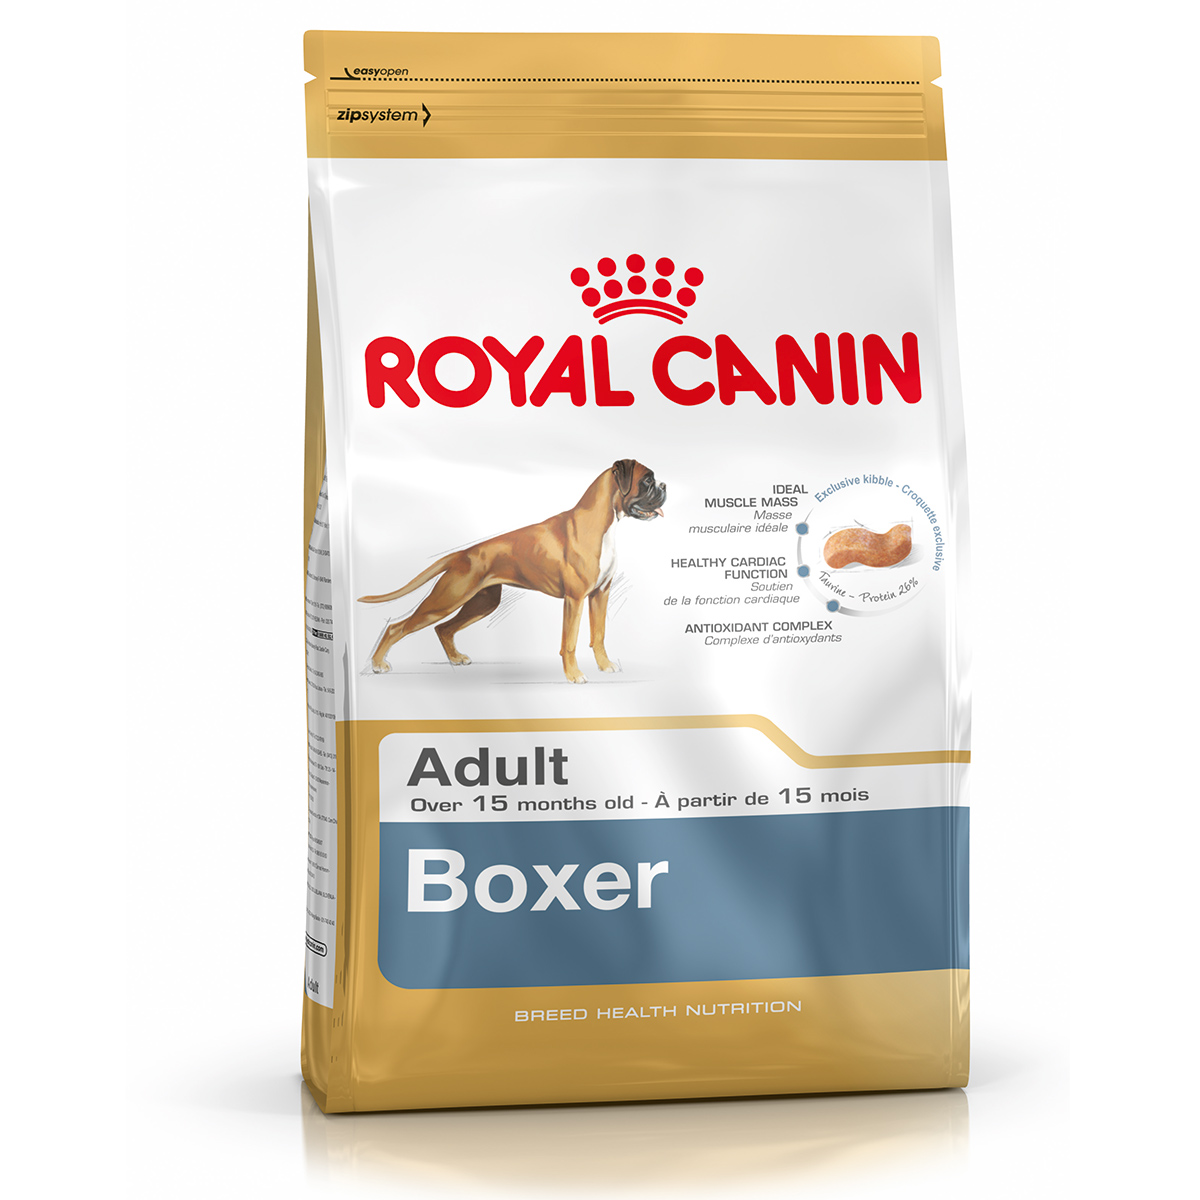 Royal Canin Boxer Adult imagine